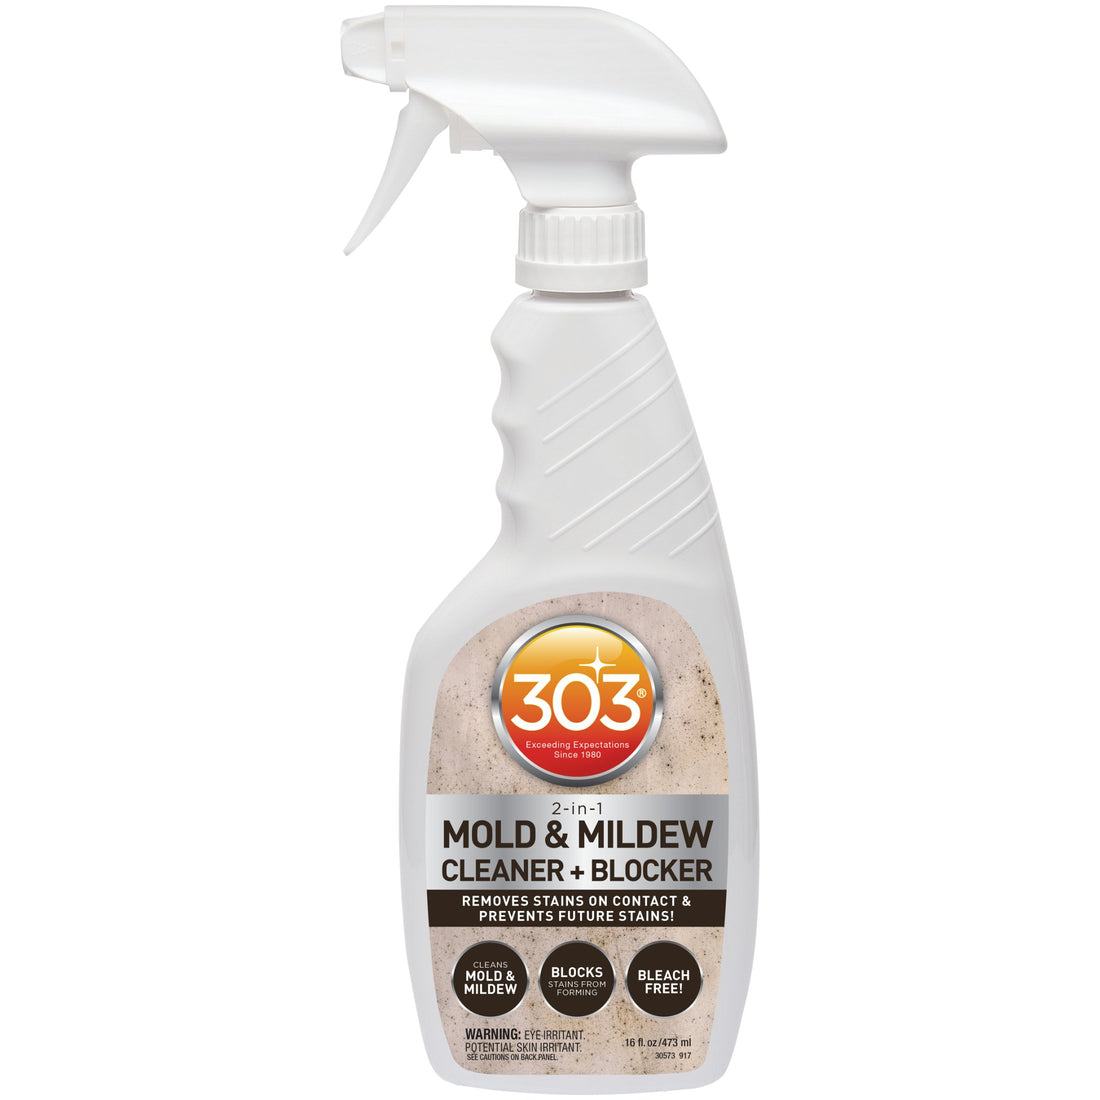 303 Mould & Mildew Cleaner + Blocker